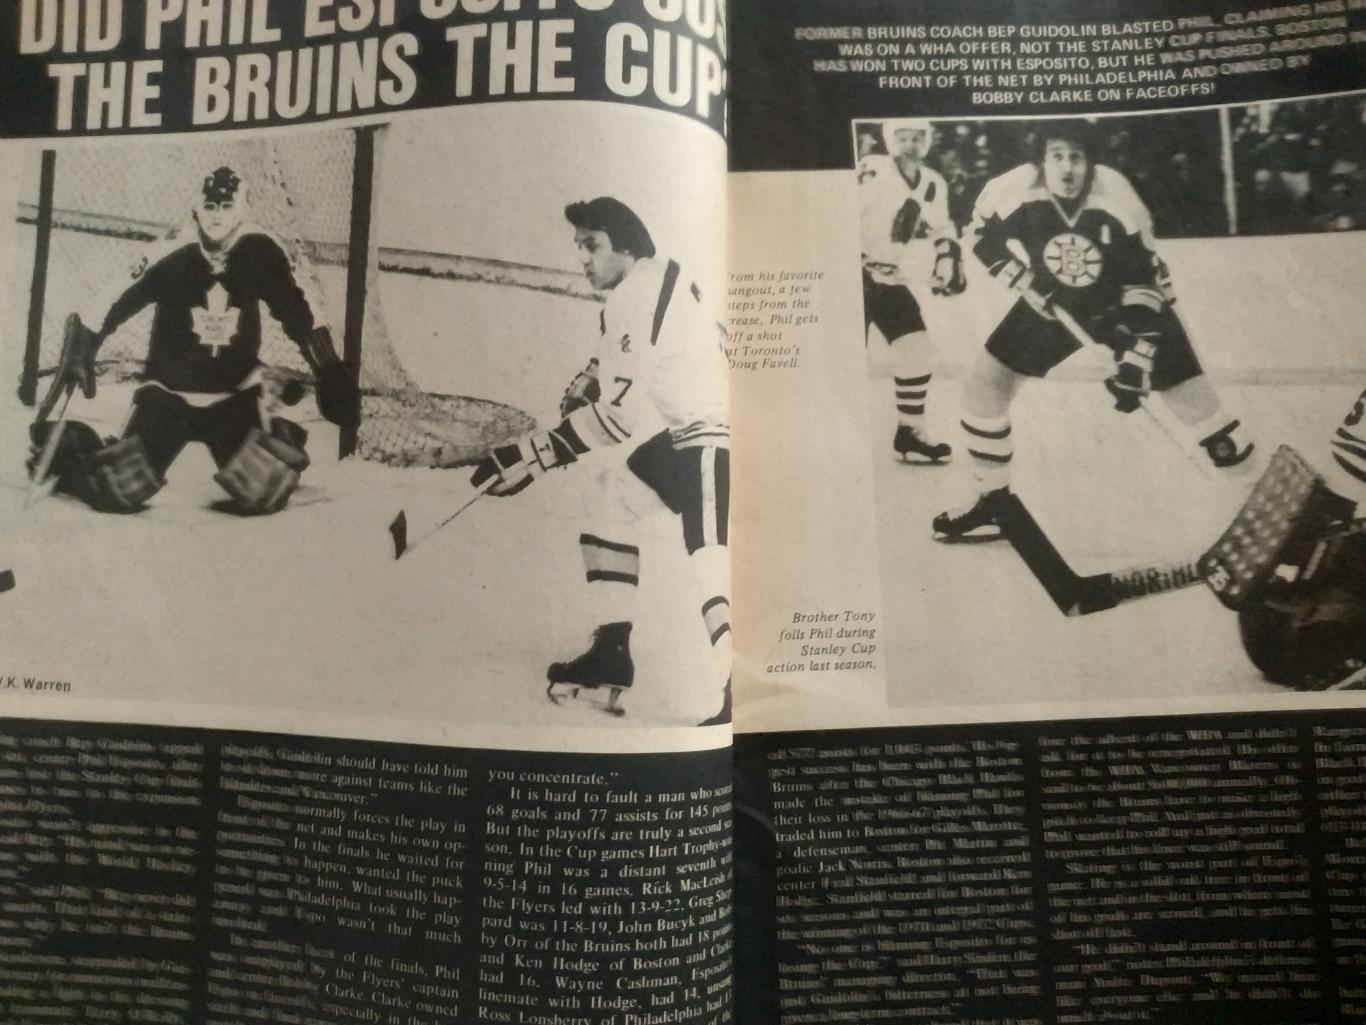 ЖУРНАЛ НХЛ СПОРТ СПЕШИАЛ ХОККЕЙ NOV 1974 NHL SPORTS SPECIAL HOCKEY 3